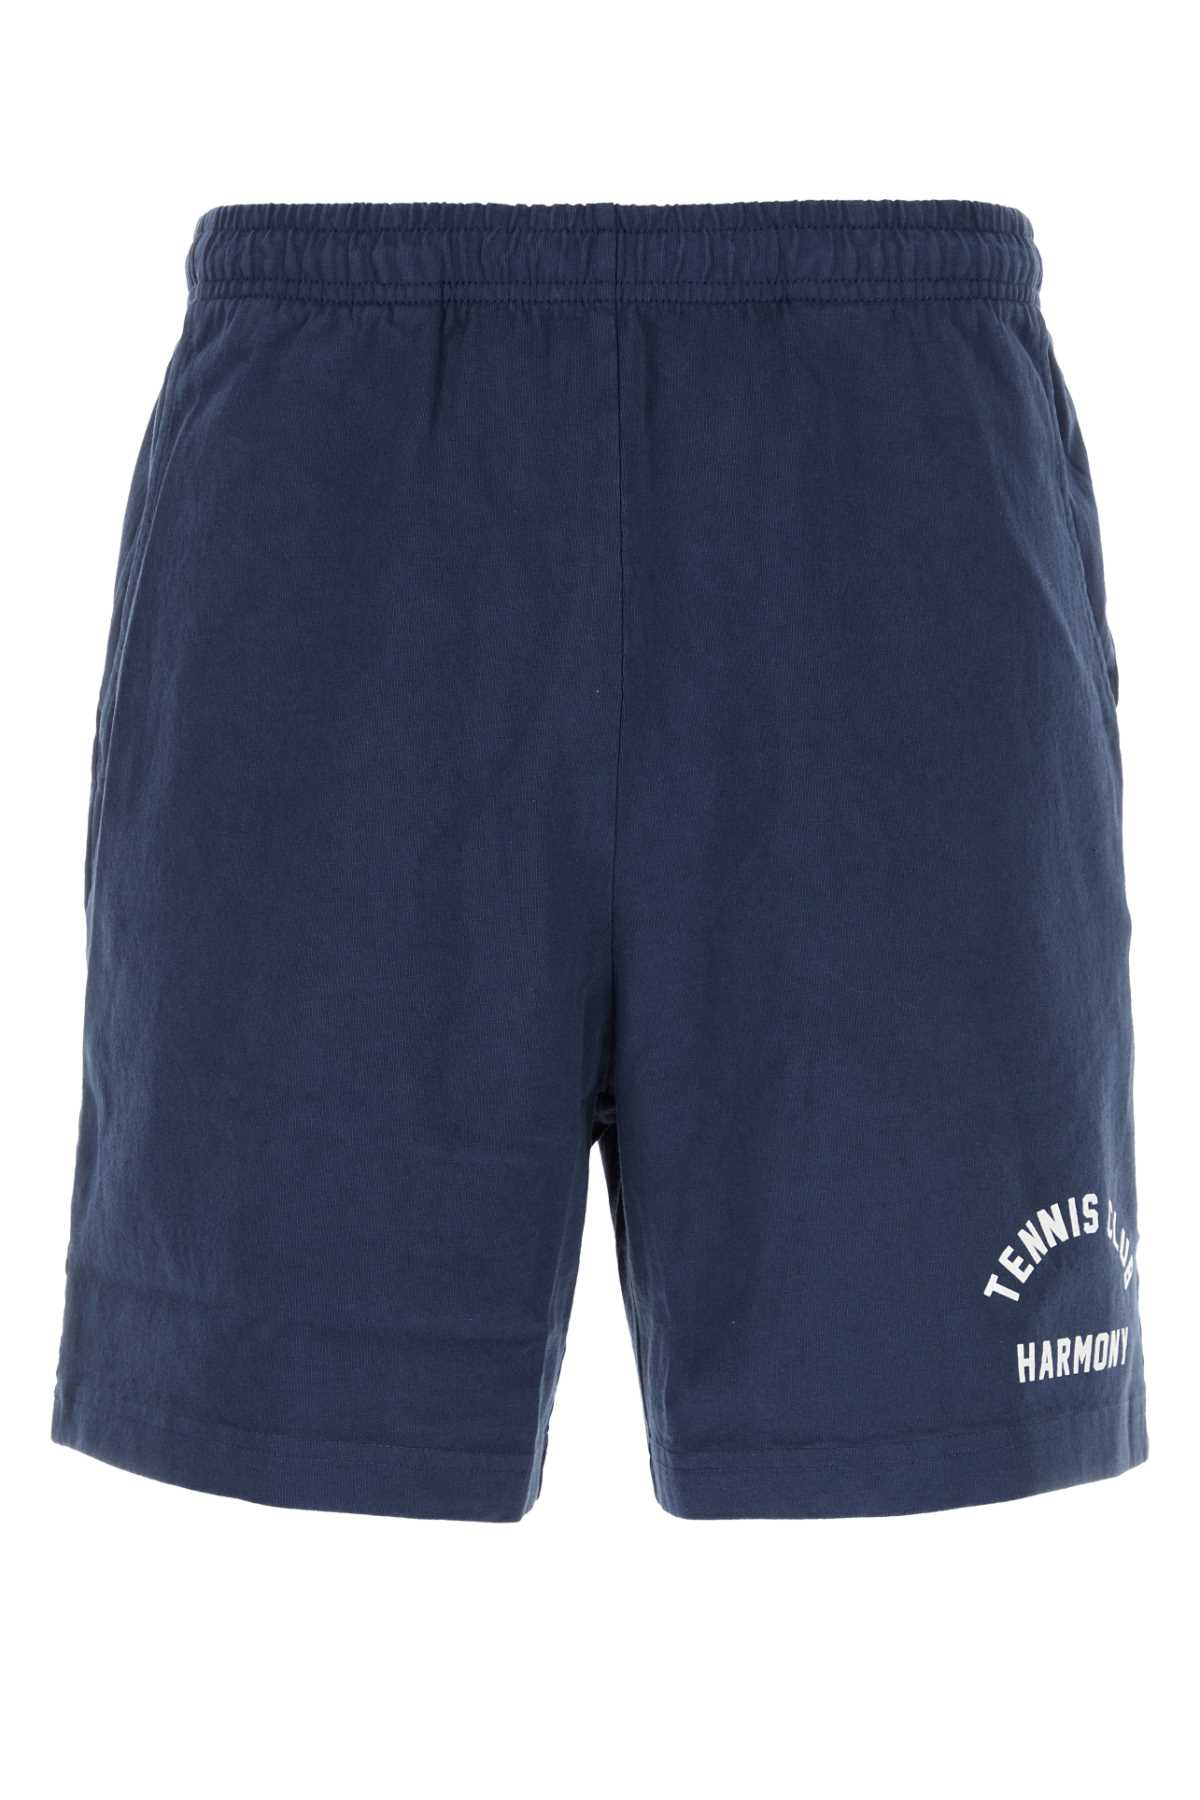 Navy Blue Cotton Bermuda Shorts